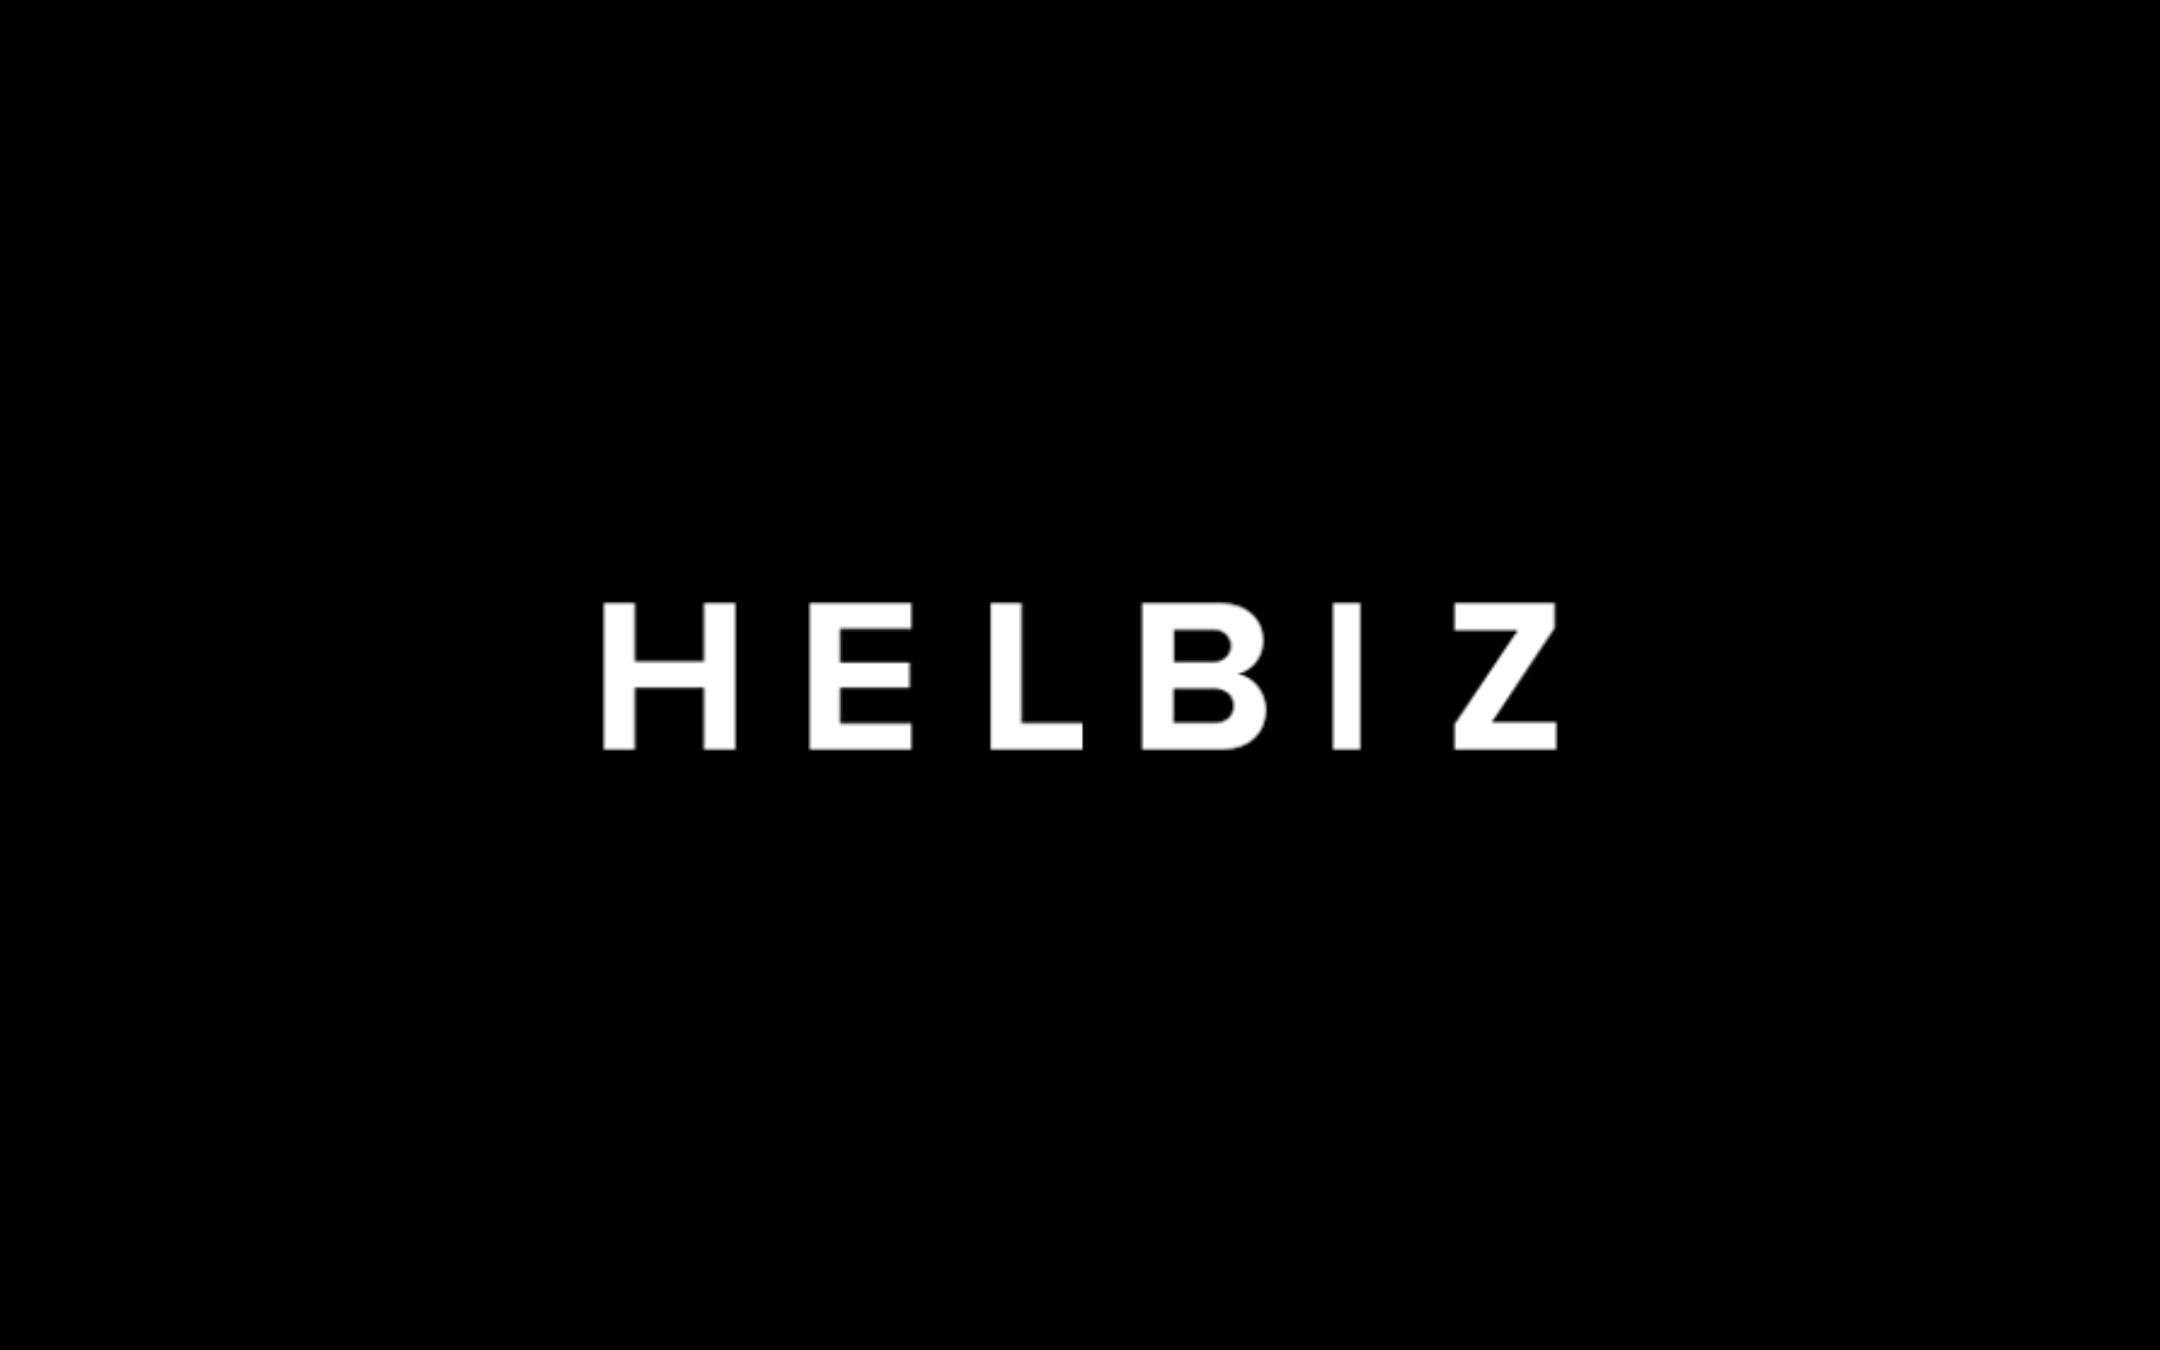 HELBIZ sbarca su ufficialmente Huawei AppGallery